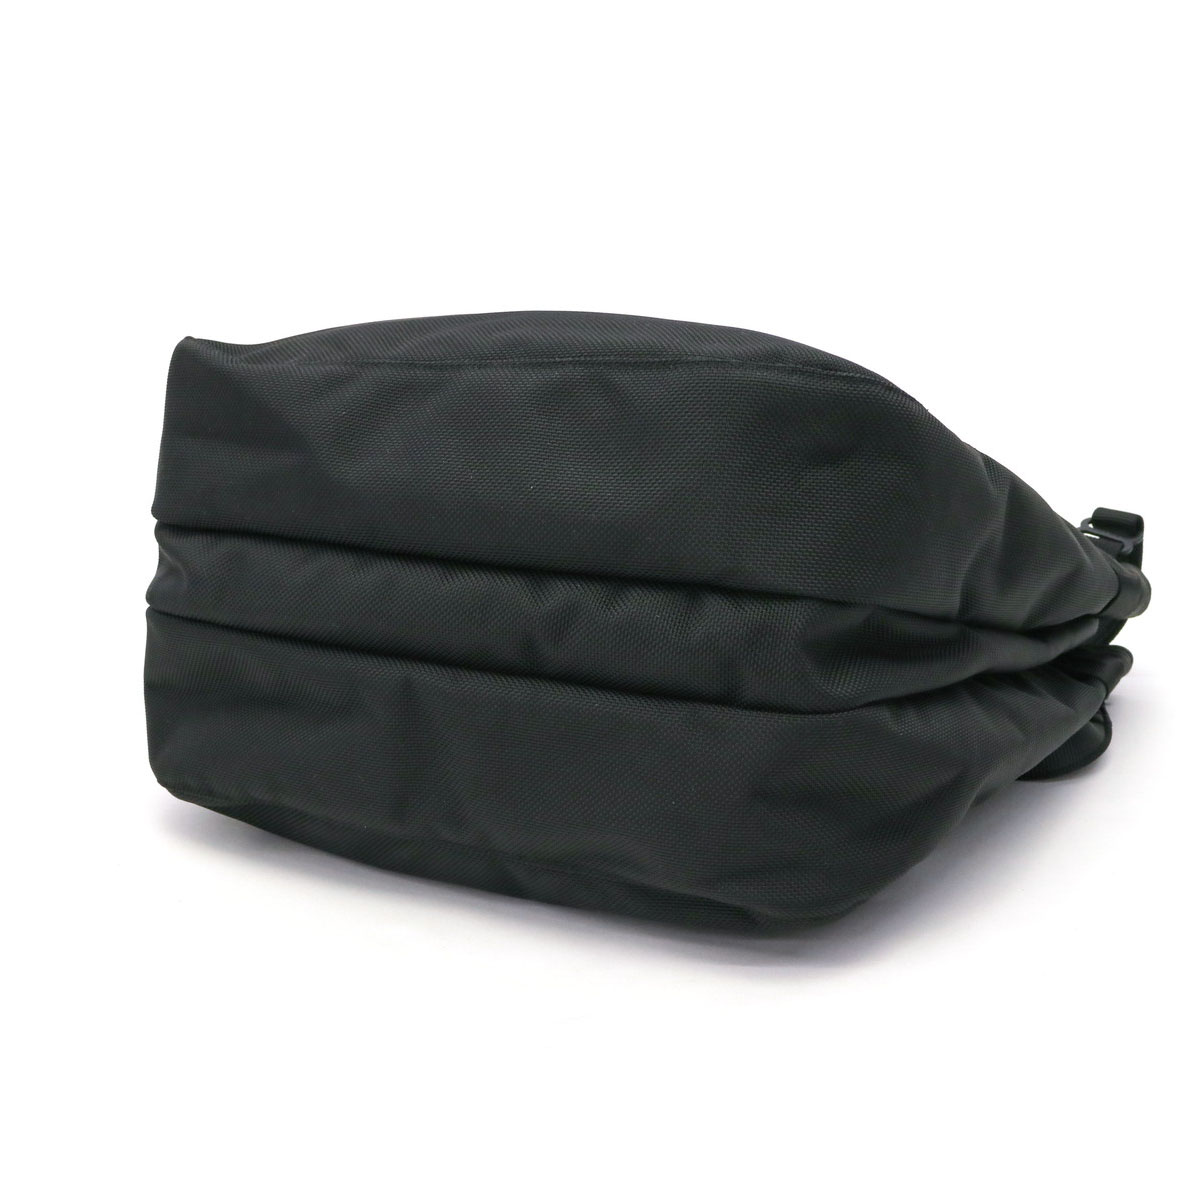 GALLERIA Bag-Luggage: BRIEFING Tote Bag R3 TOTE 3 Room A4 Men's Women's ...